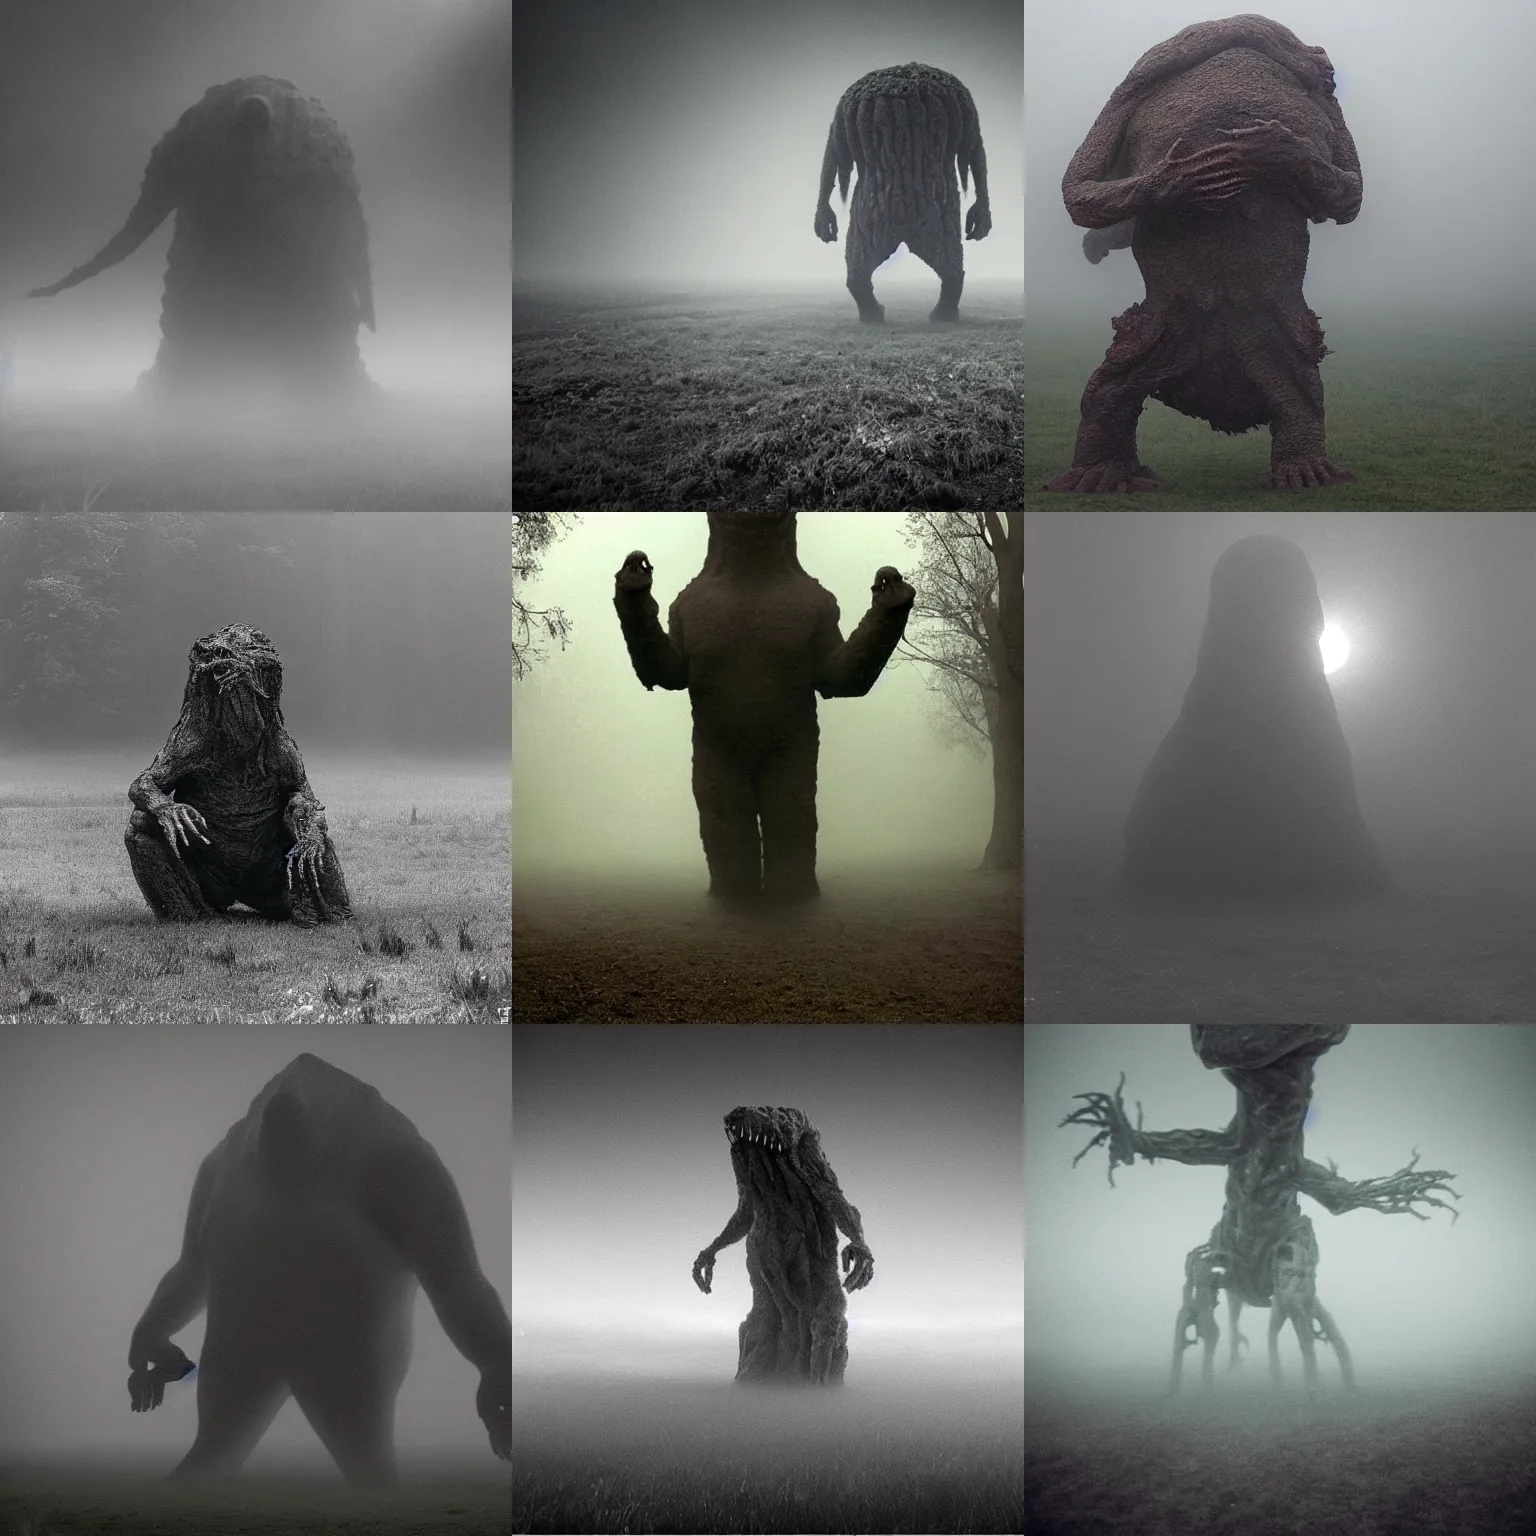 the mist giant creature